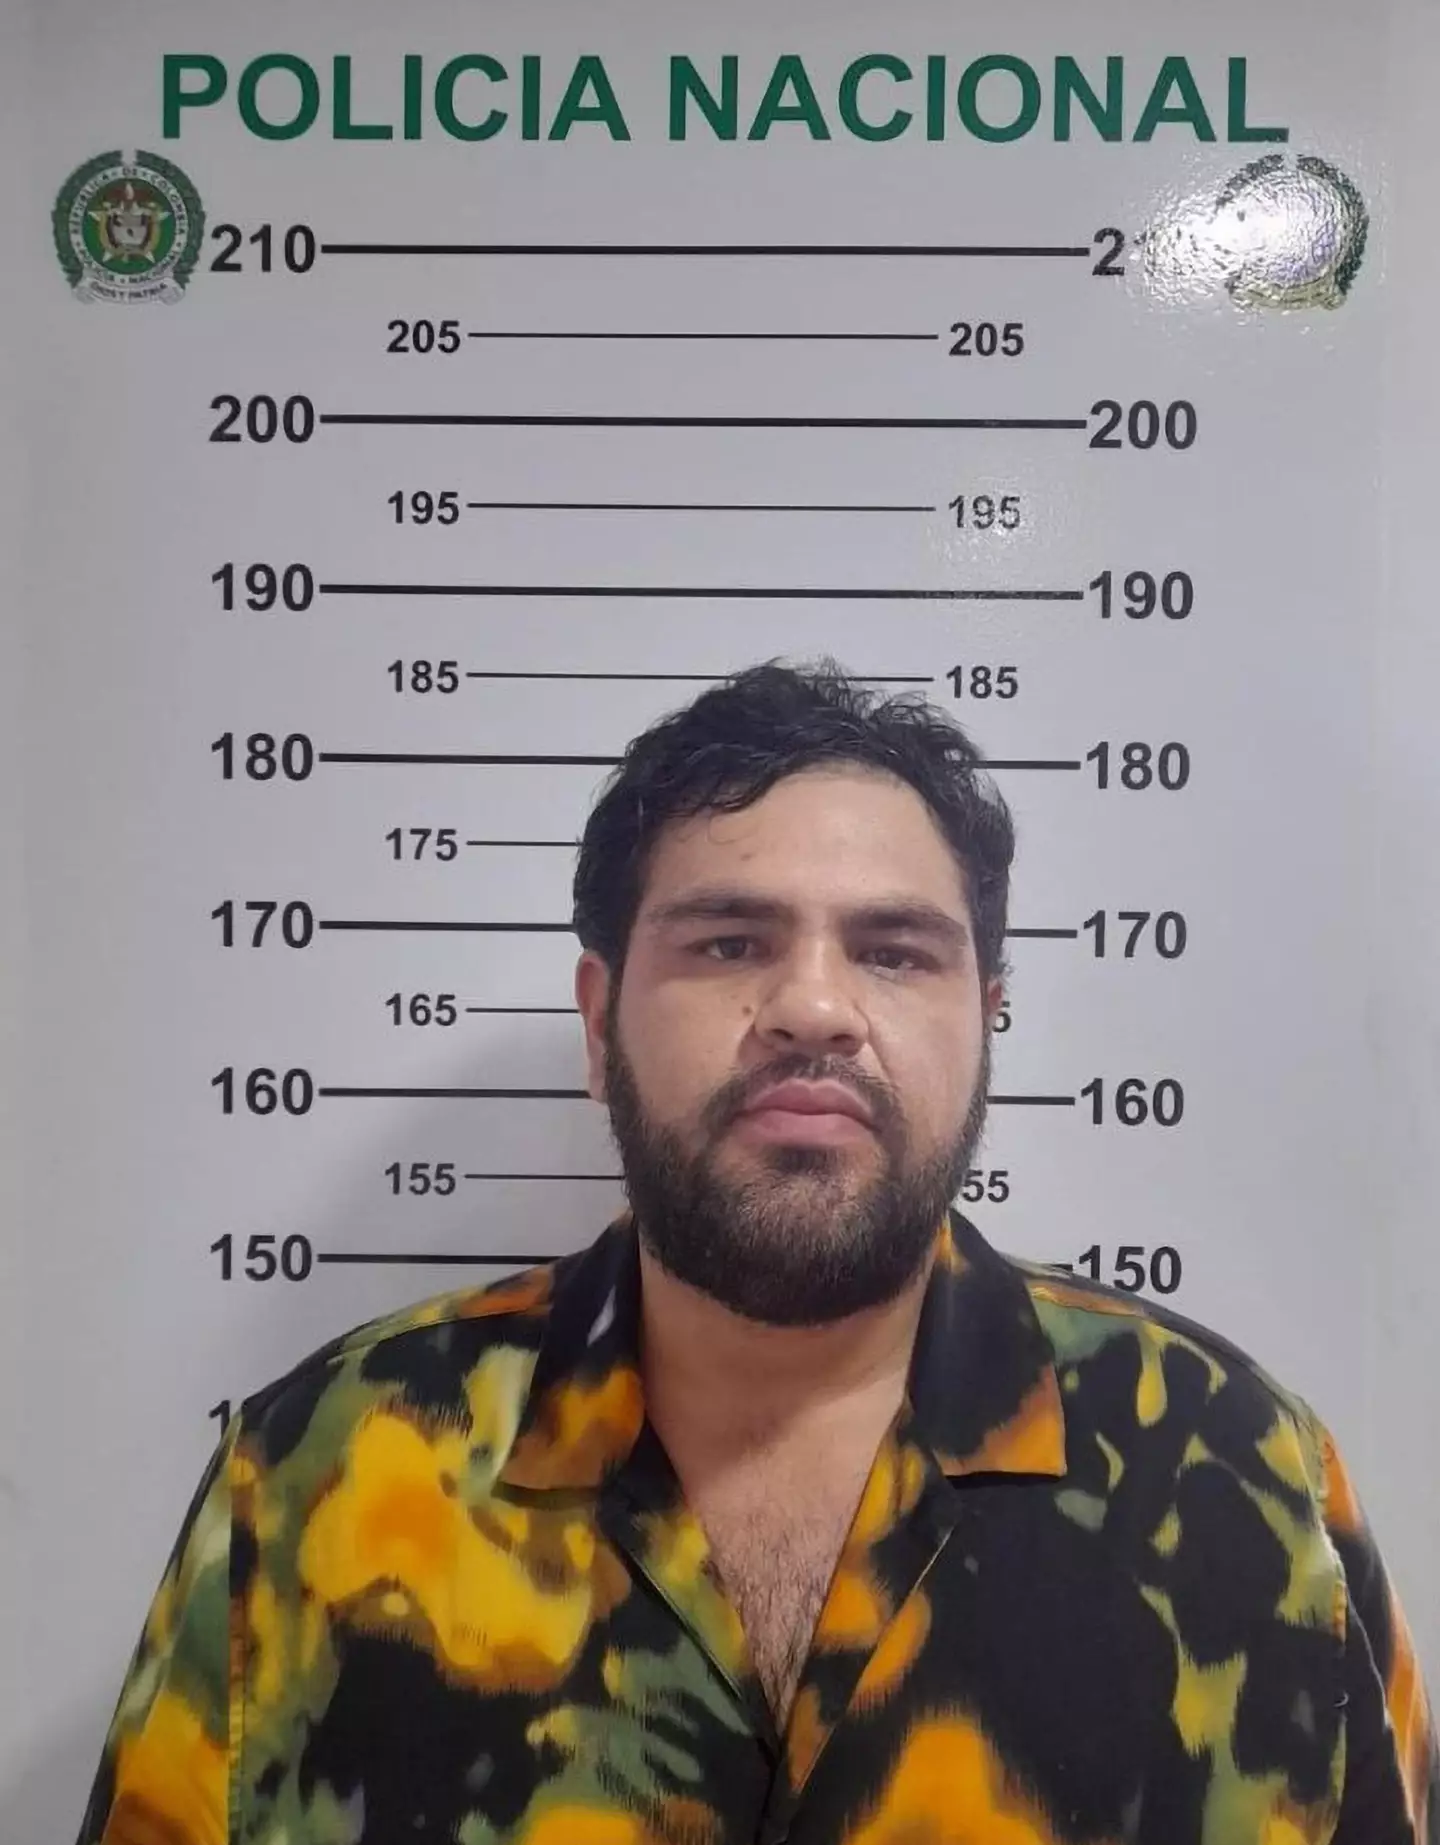 Brian Donaciano Olguín Berdugo was arrested because of a Facebook photo.